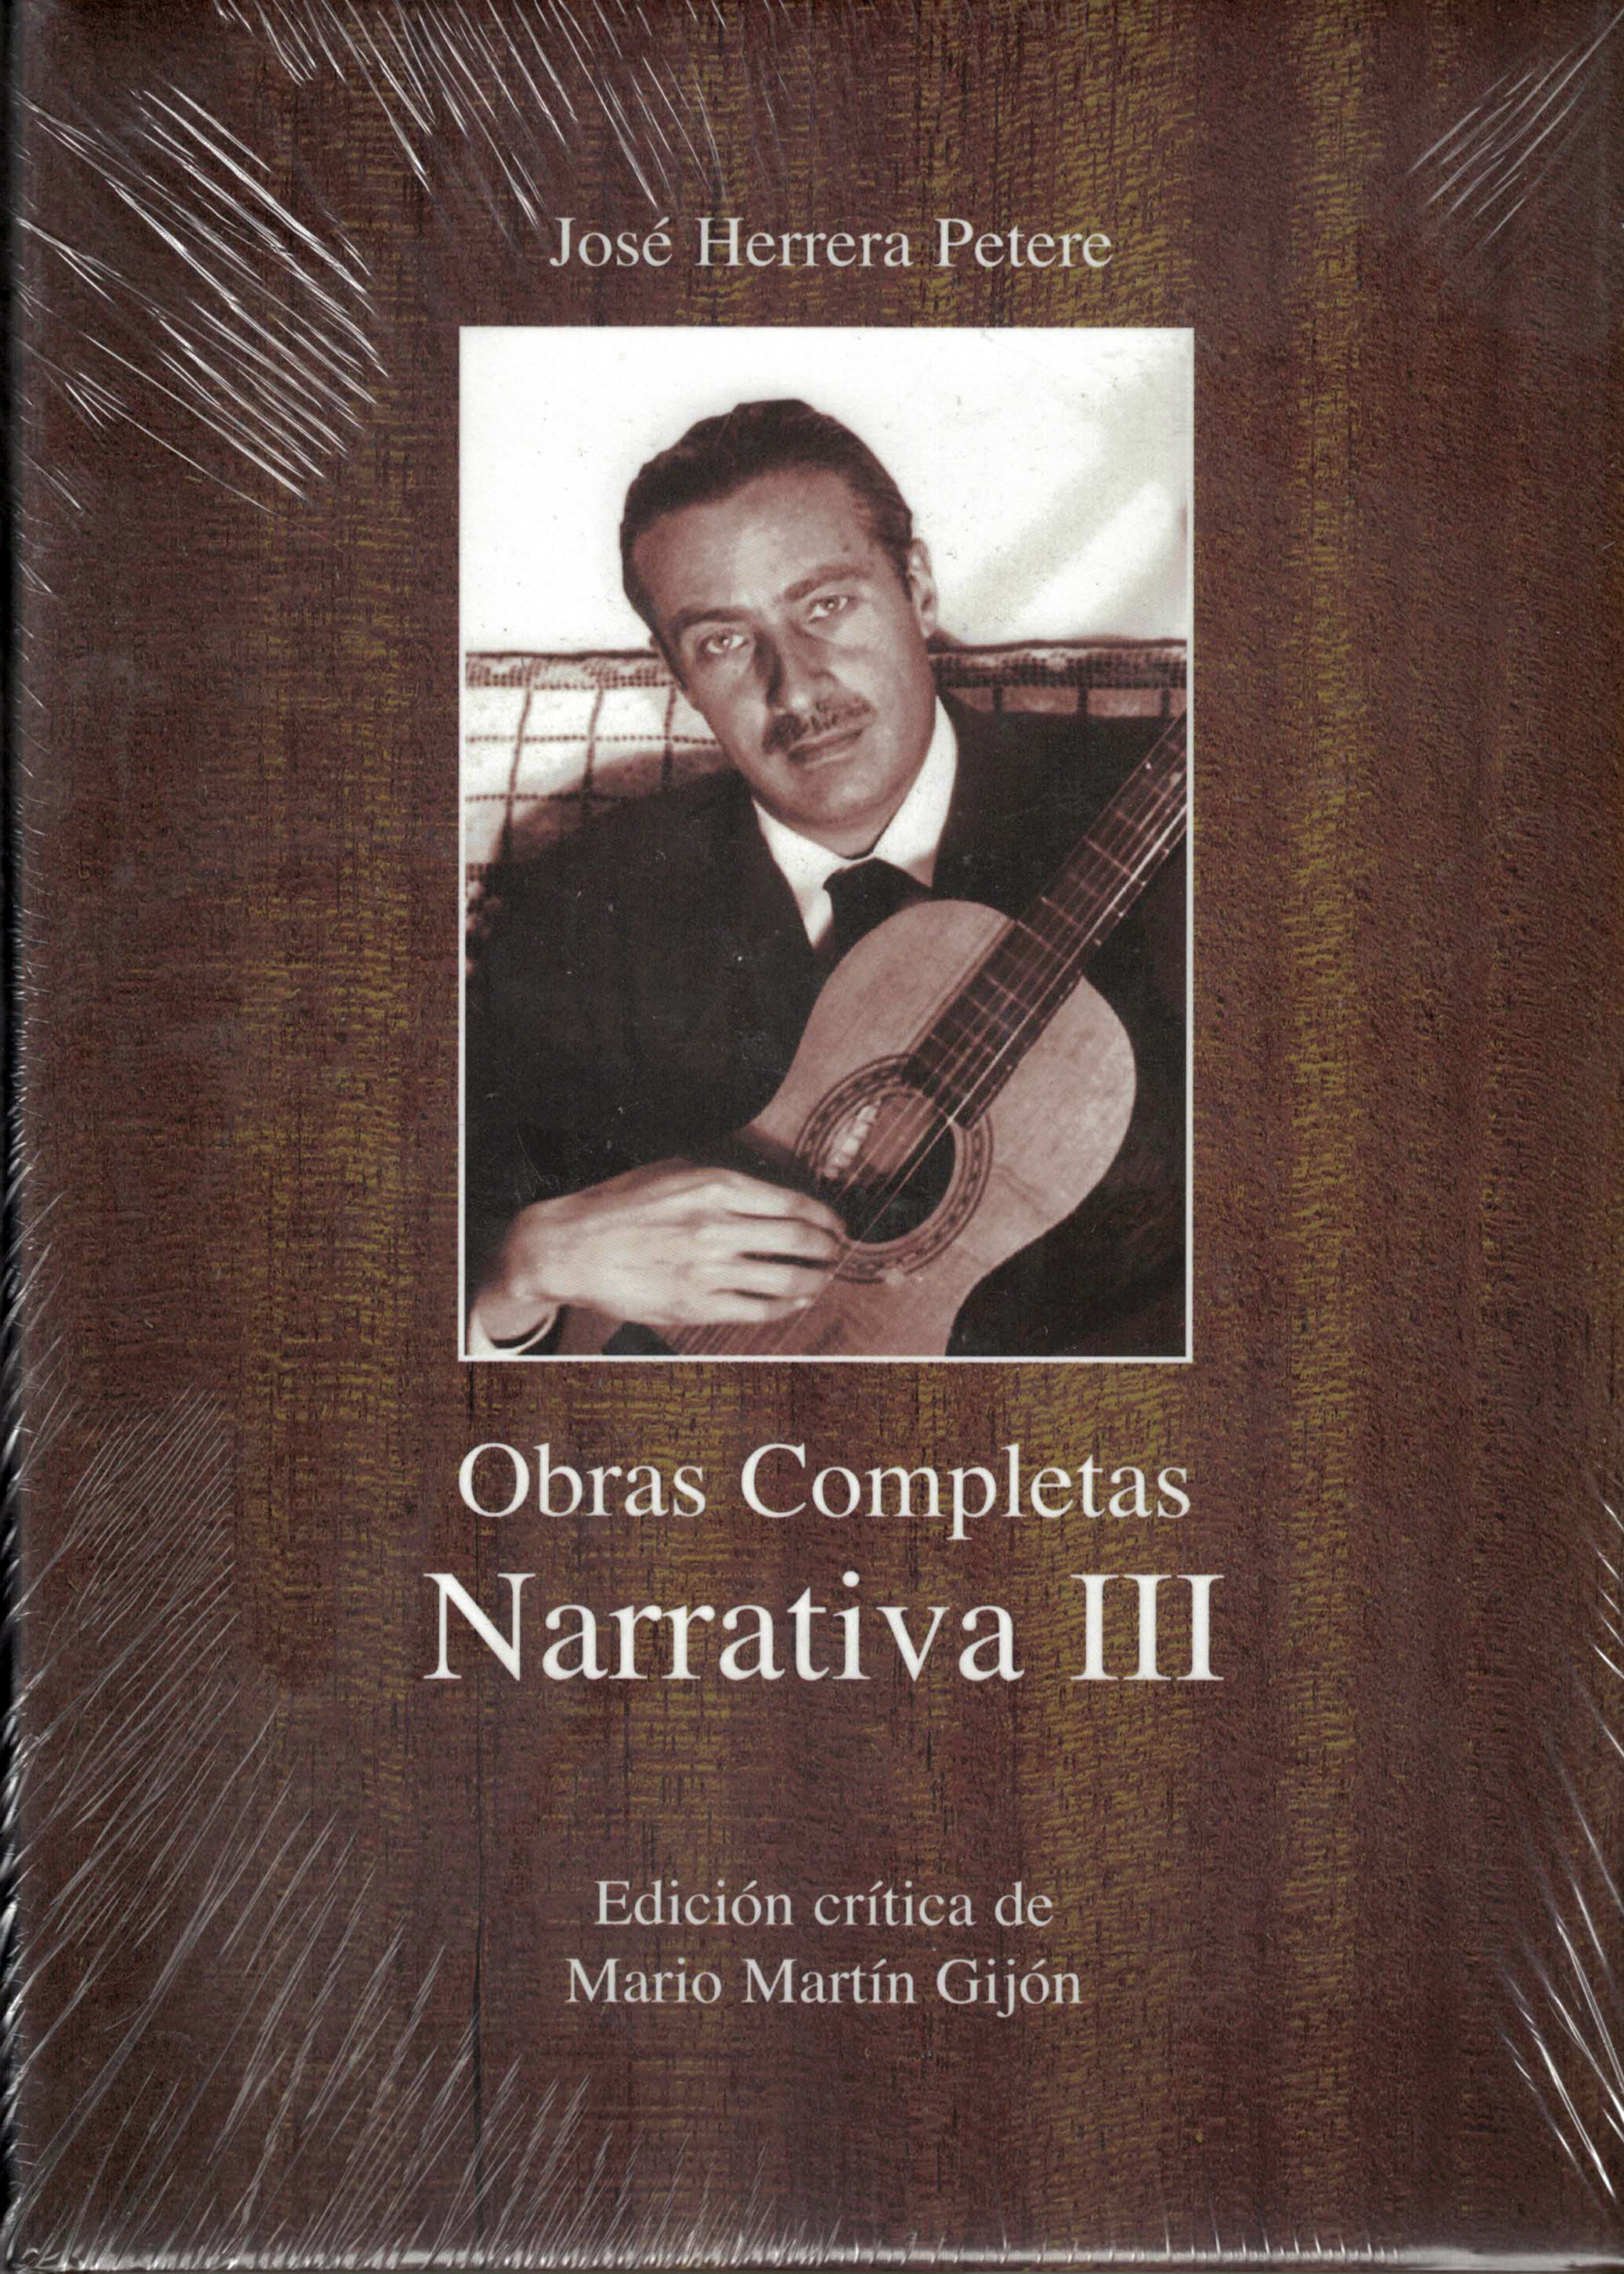 Obras Completas Narrativa III, José Herrera Petere